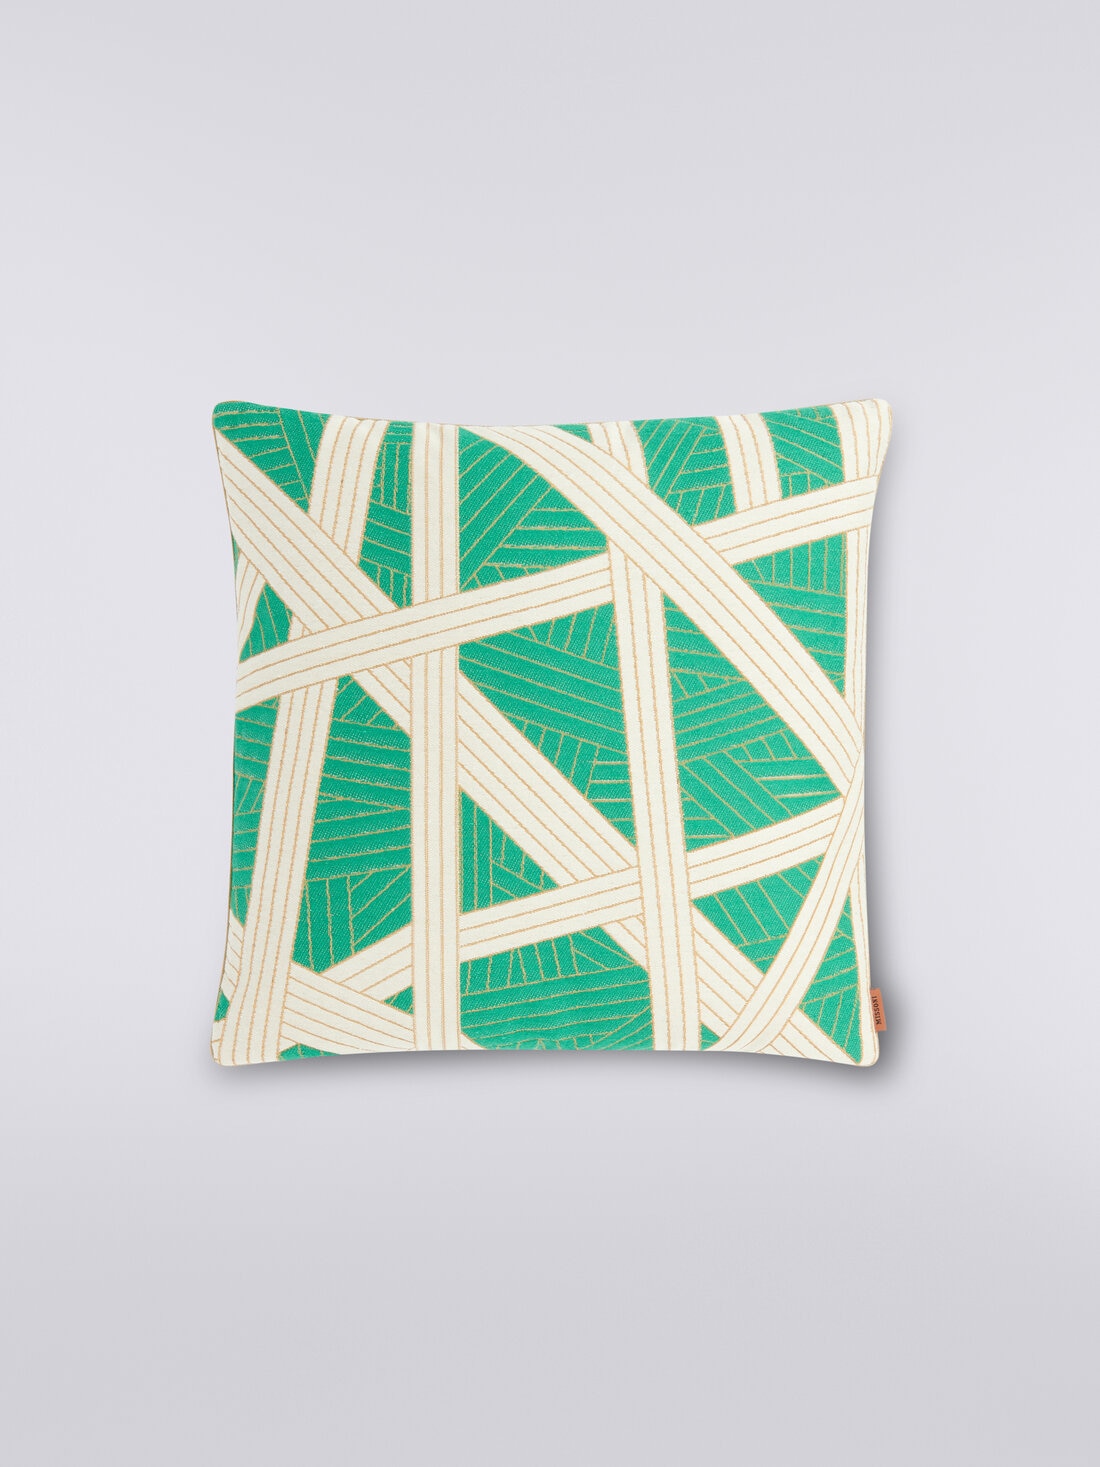 Nastri cushion 40x40 cm with stitching, Multicoloured  - 8051575830549 - 0